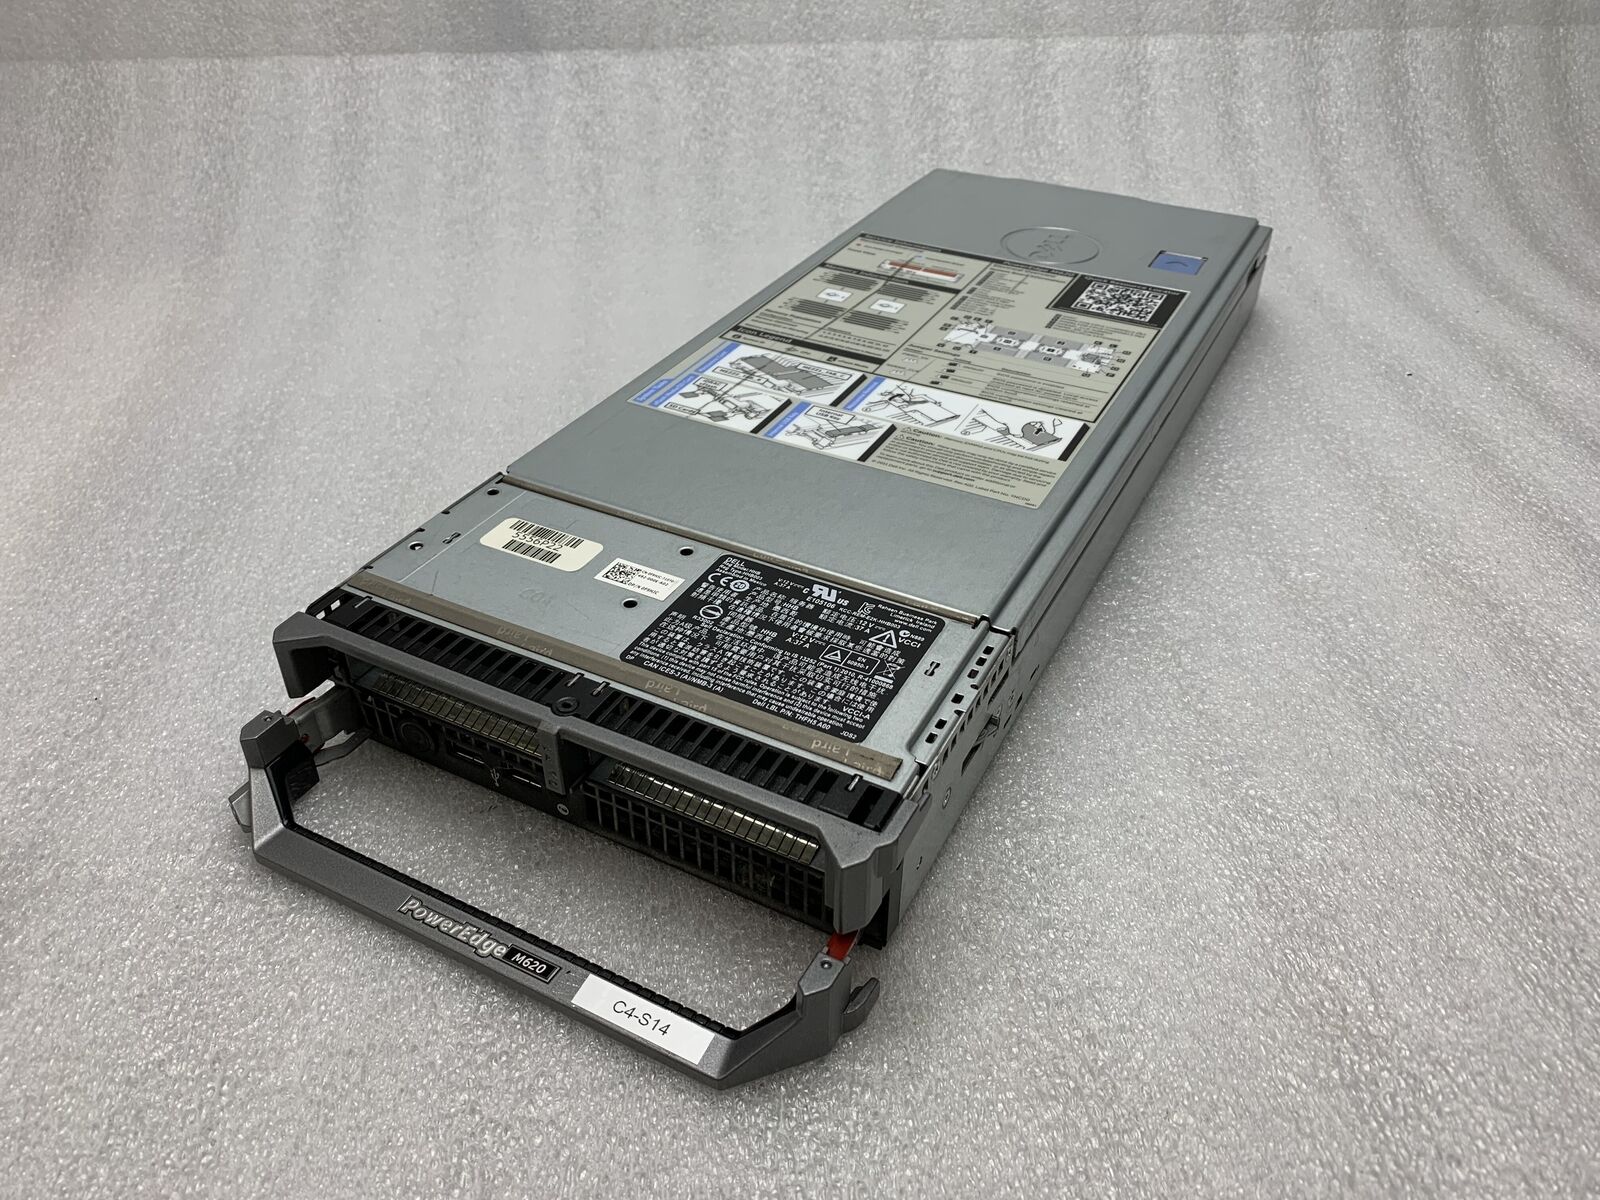 Dell PowerEdge M620 Blade Server Module BAREBONES (NO CPU, RAM, HDD, CADDY)